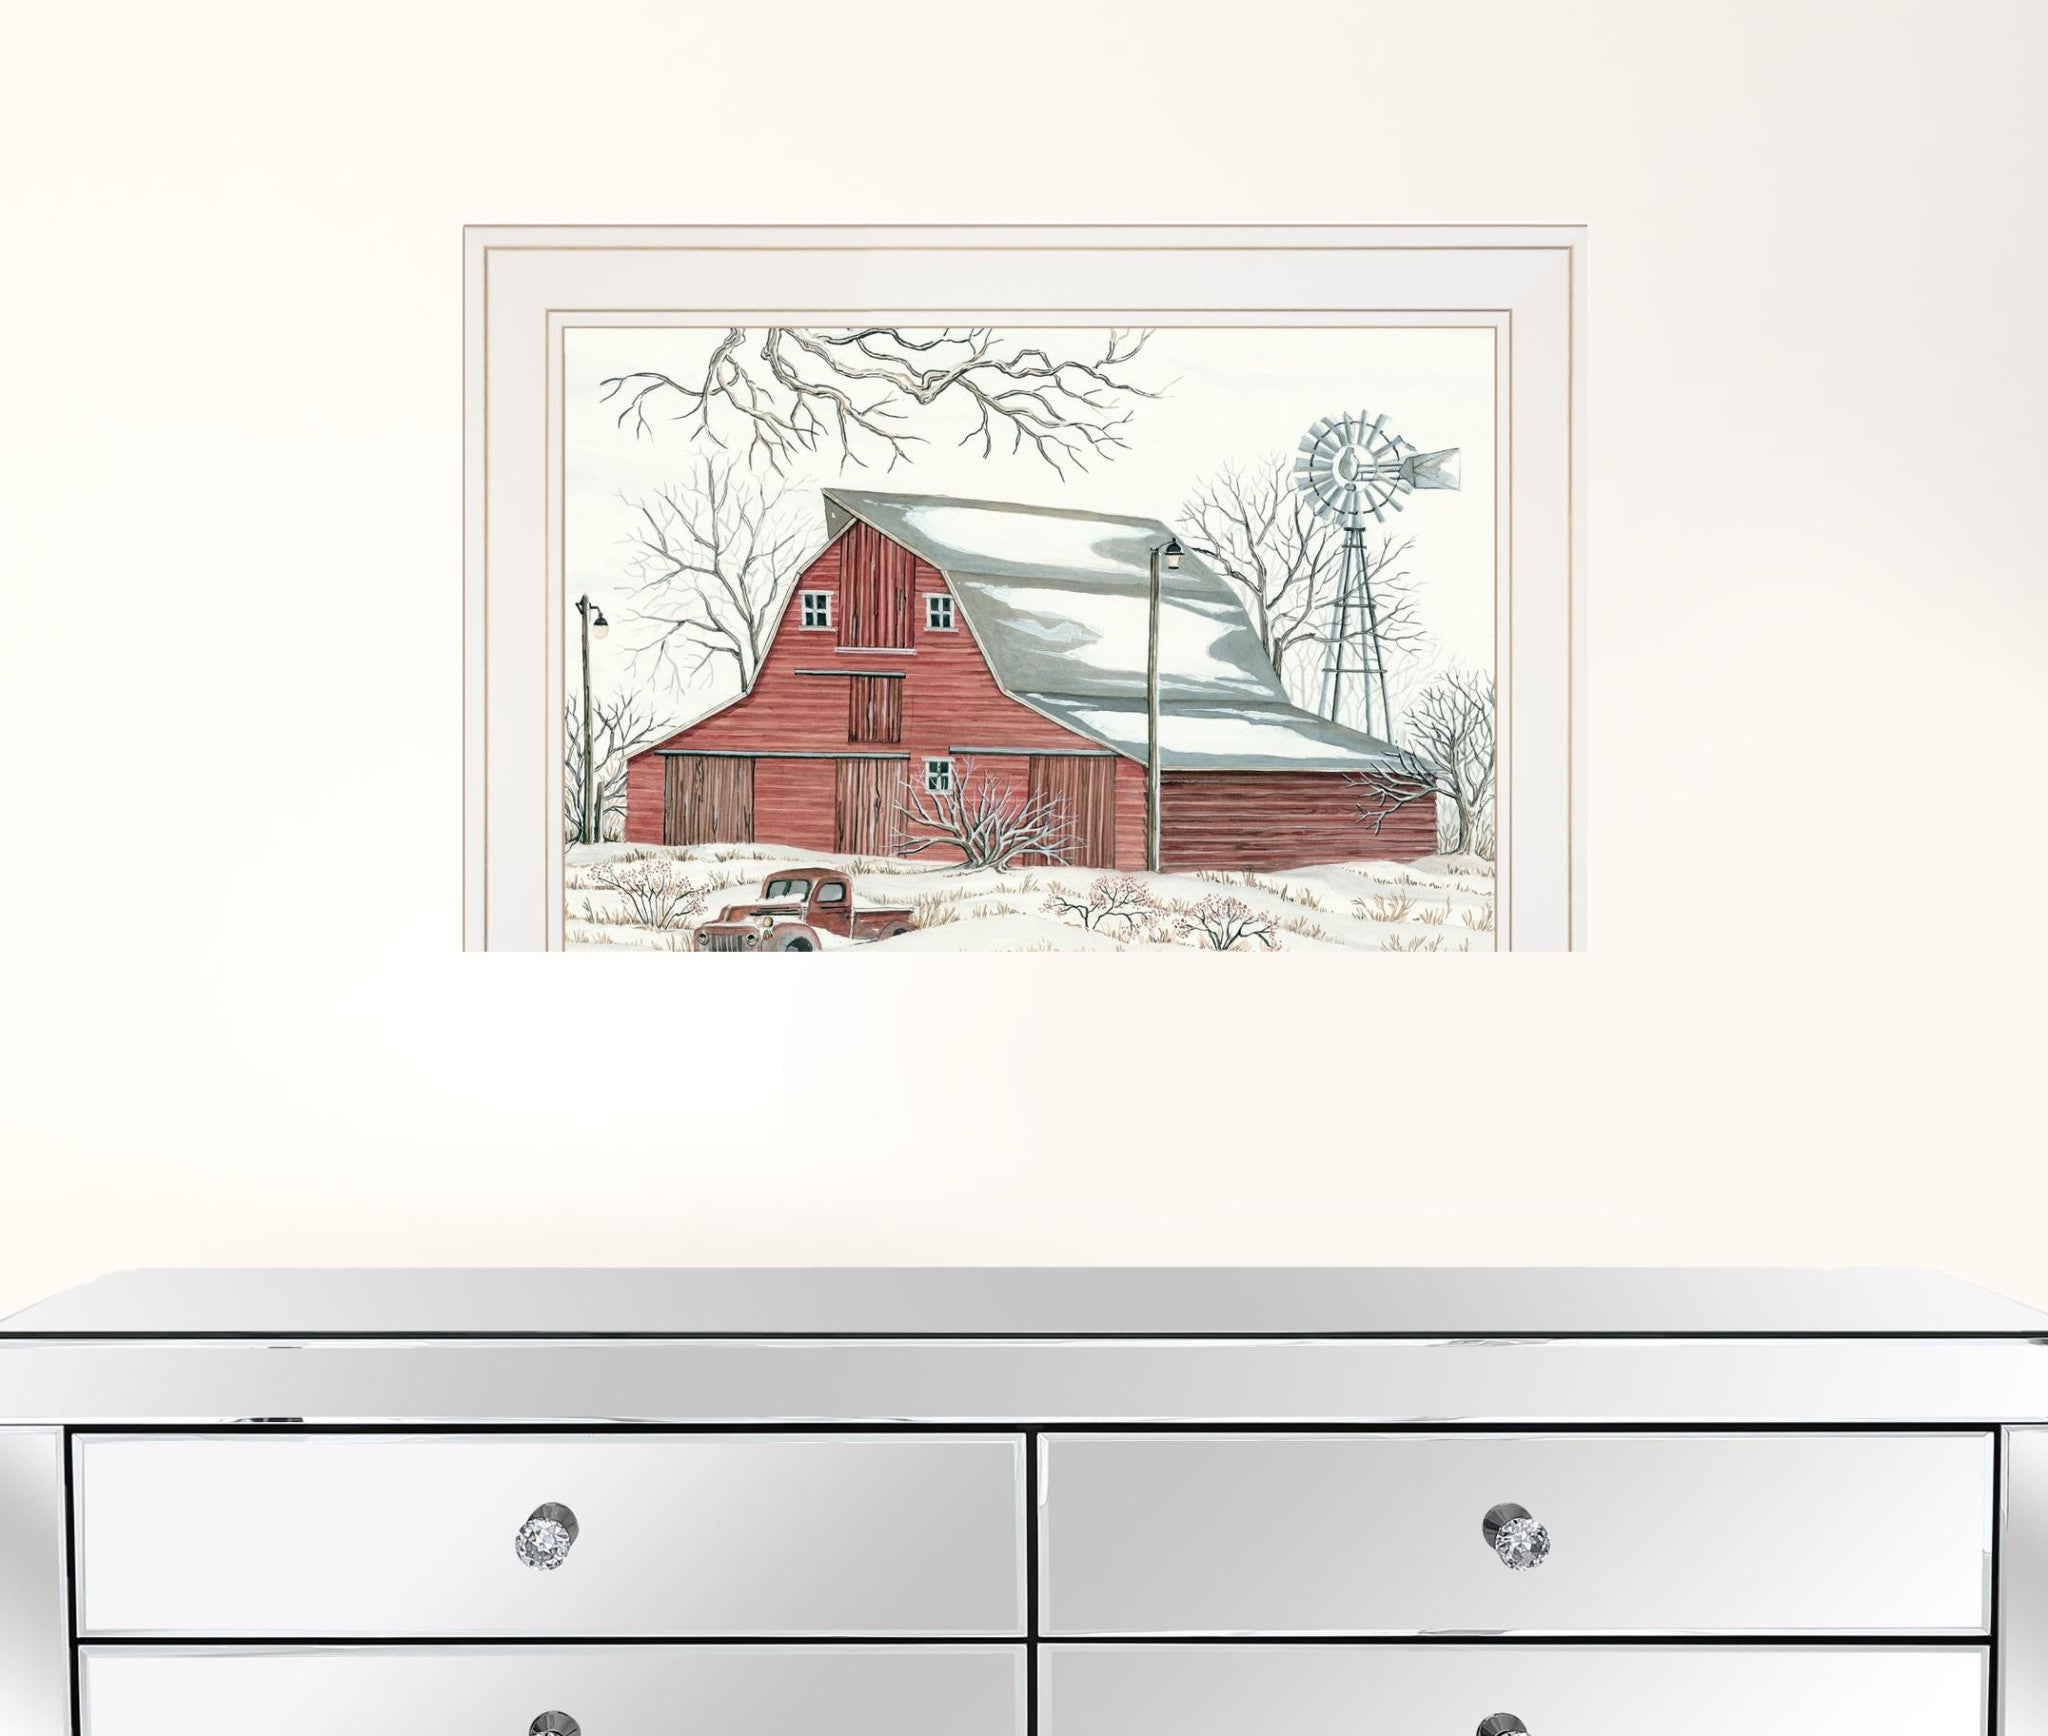 Winter Barn With Pickup Truck 1 White Framed Print Wall Art